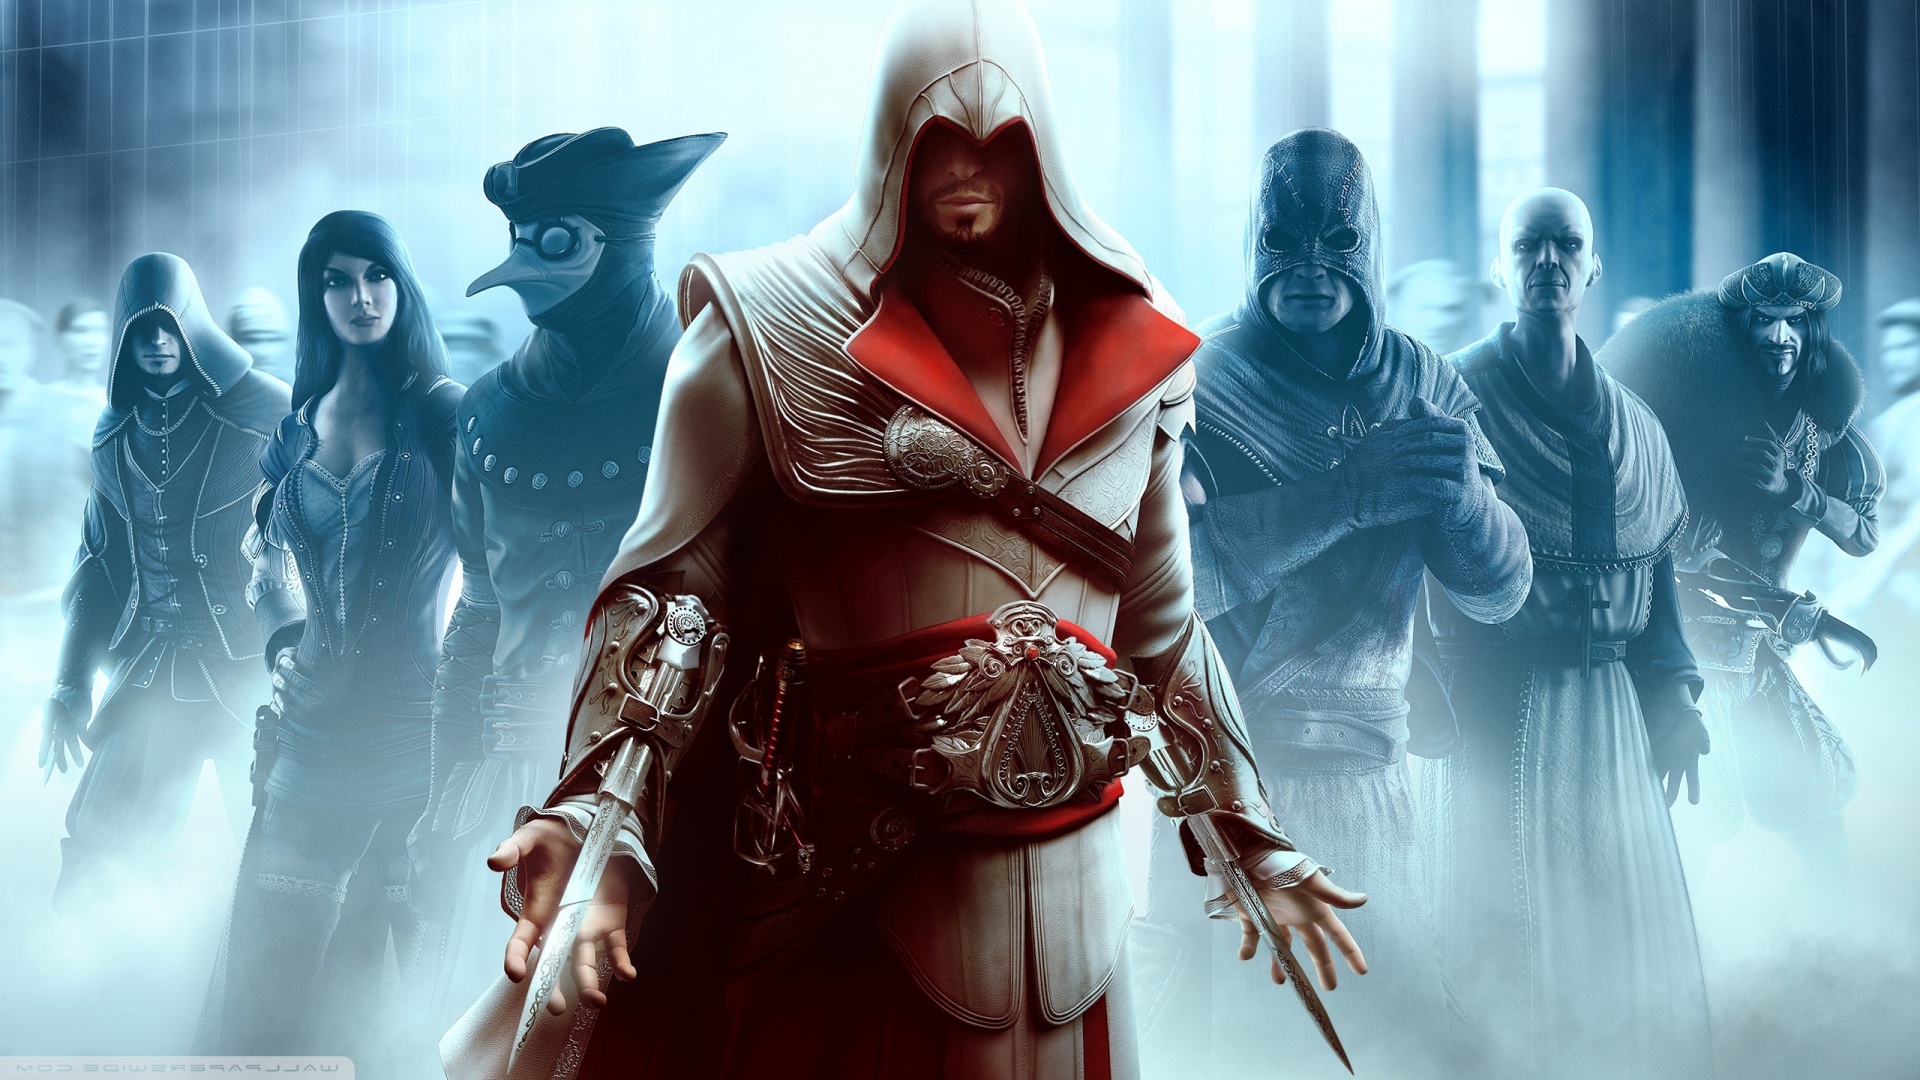 assassin's creed brotherhood wallpaper,cg artwork,games,movie,fictional character